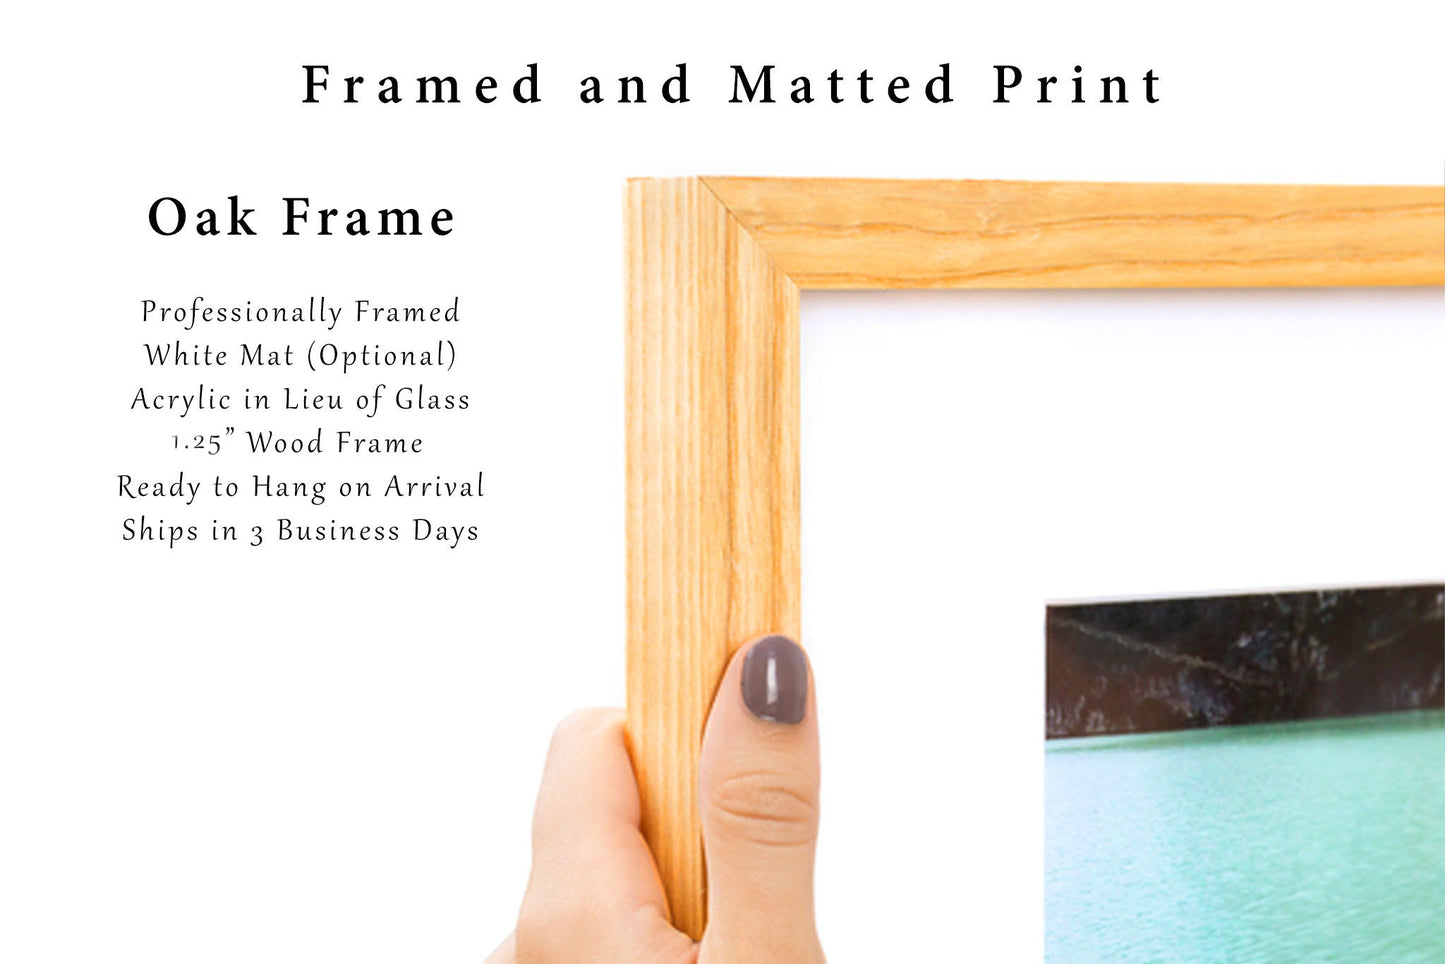 Angel Oak Tree Framed and Matted Print | Lowcountry Photo | Charleston South Carolina Decor | Southern Photography | Nature Wall Art | Ready to Hang